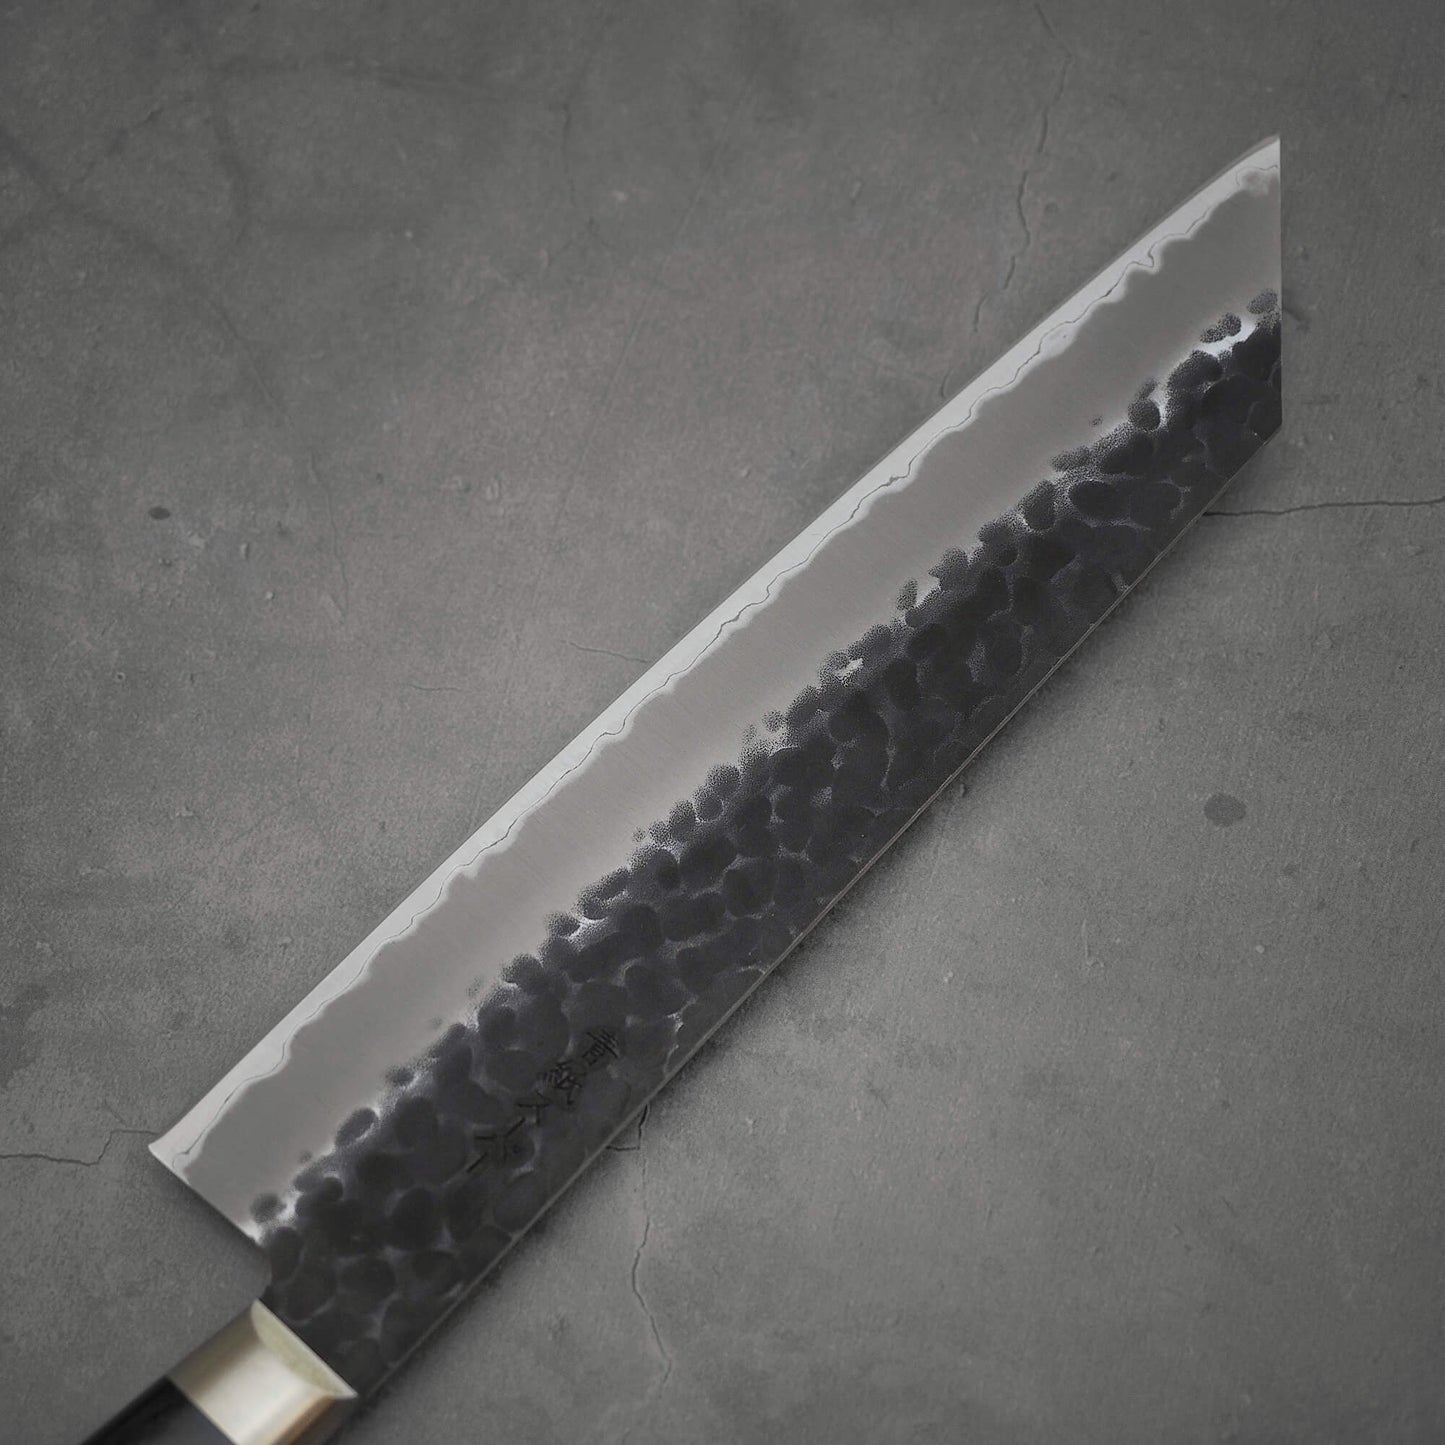 Top view of the blade of Ittosai Kotetsu tsuchime kurouchi aogami super kiritsuke gyuto. Image focuses on the left side of the blade